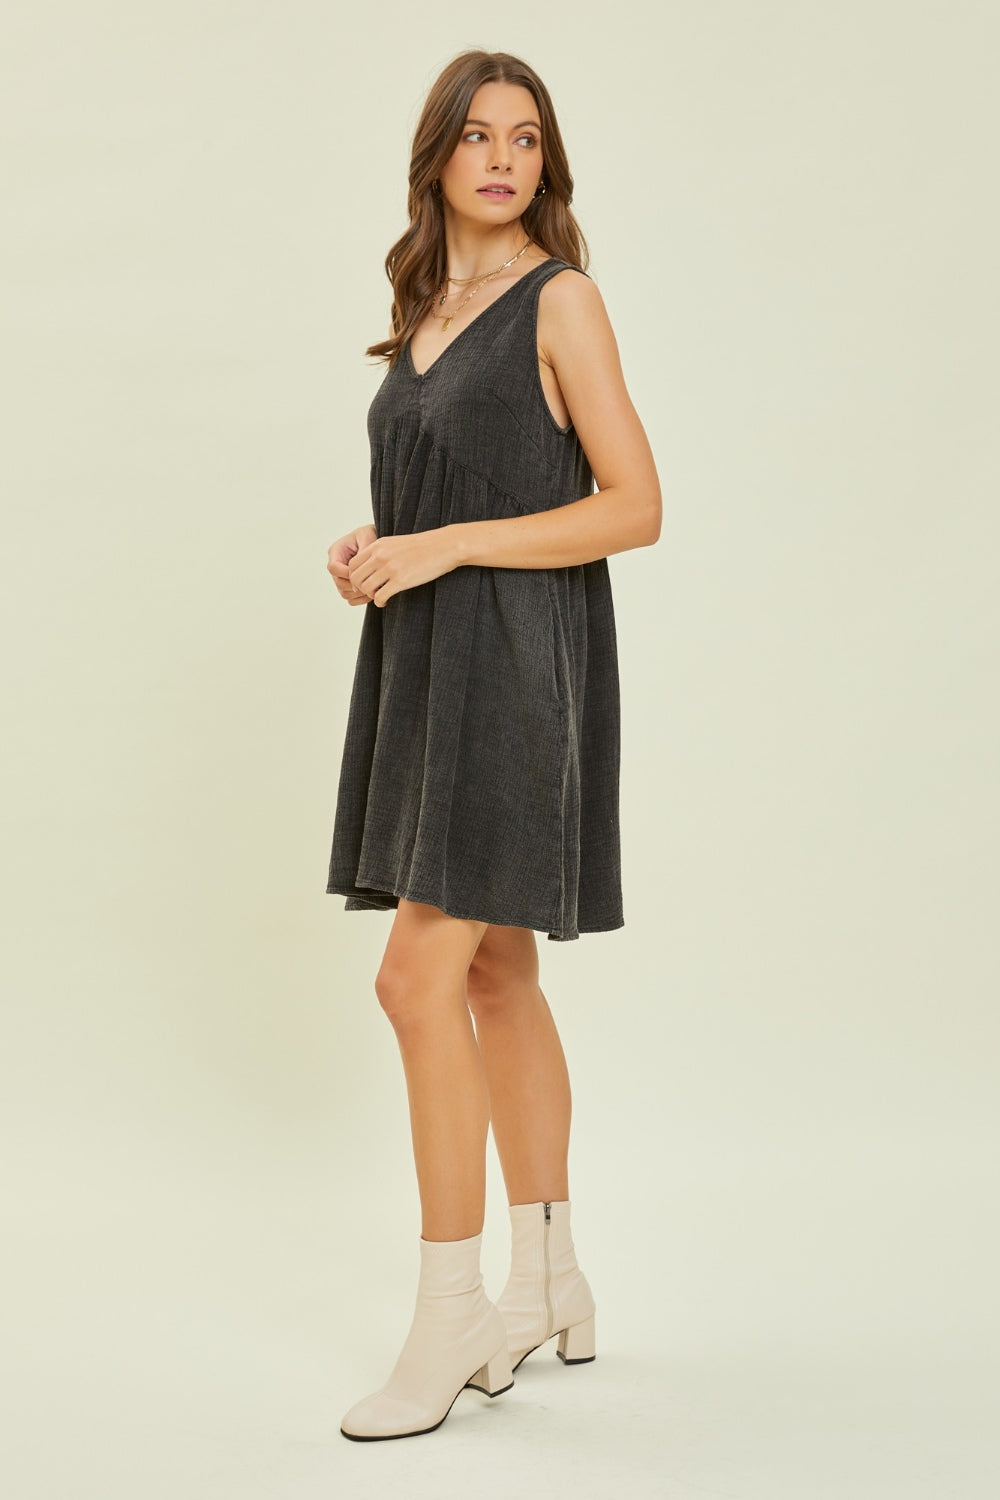 TEEK - Black Texture V-Neck Sleeveless Flare Dress DRESS TEEK Trend   